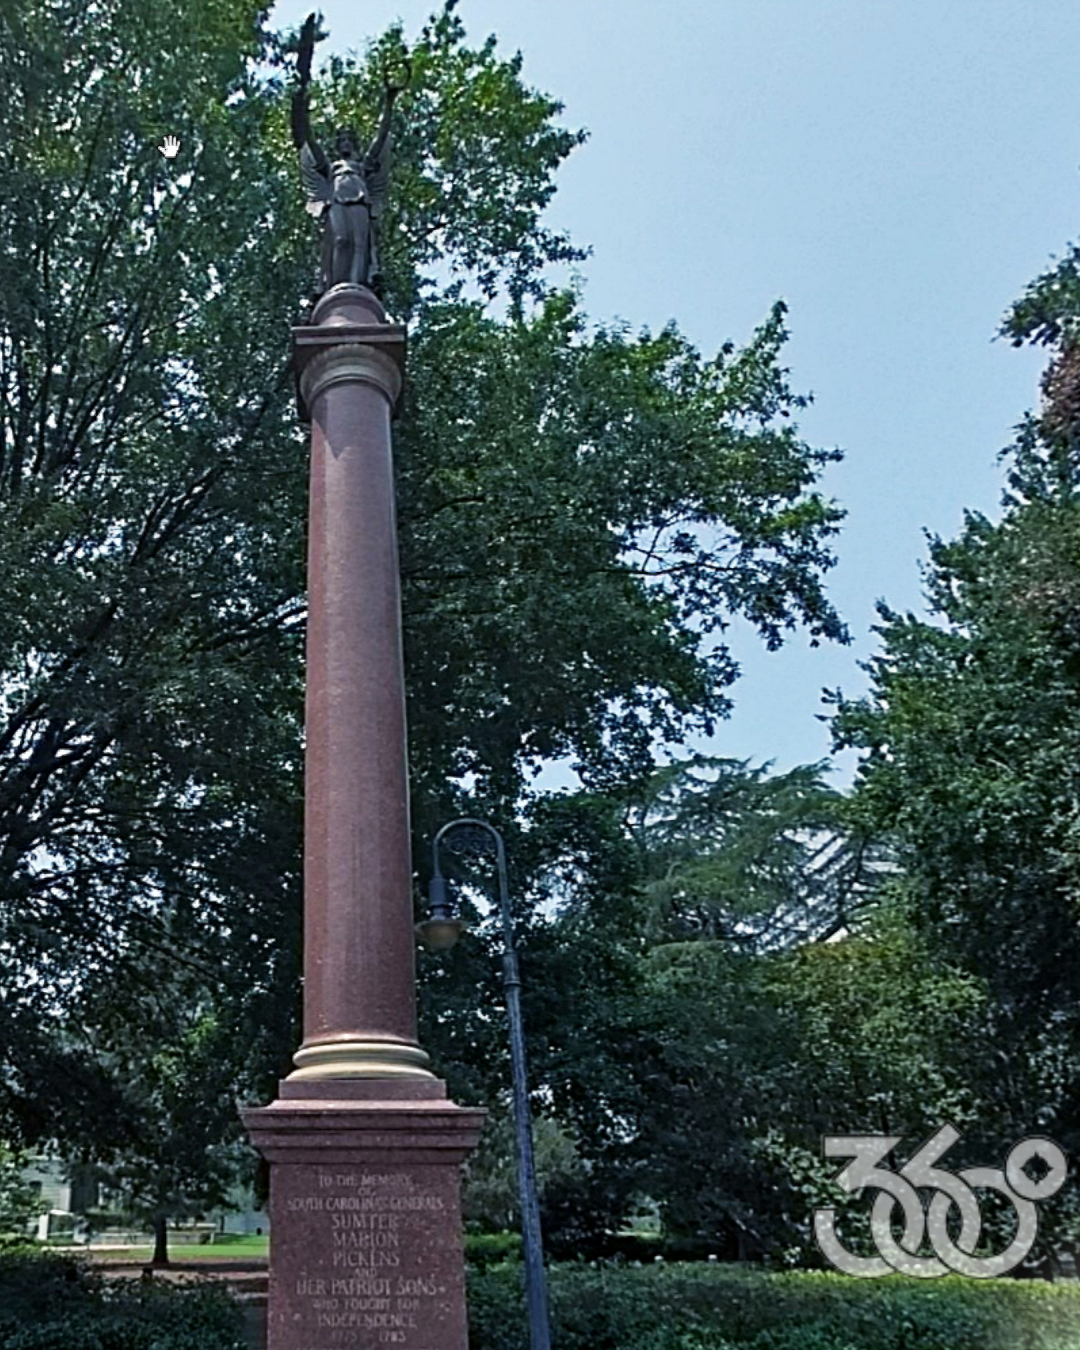 South Carolina statehouse Revolutionary War Generals monument